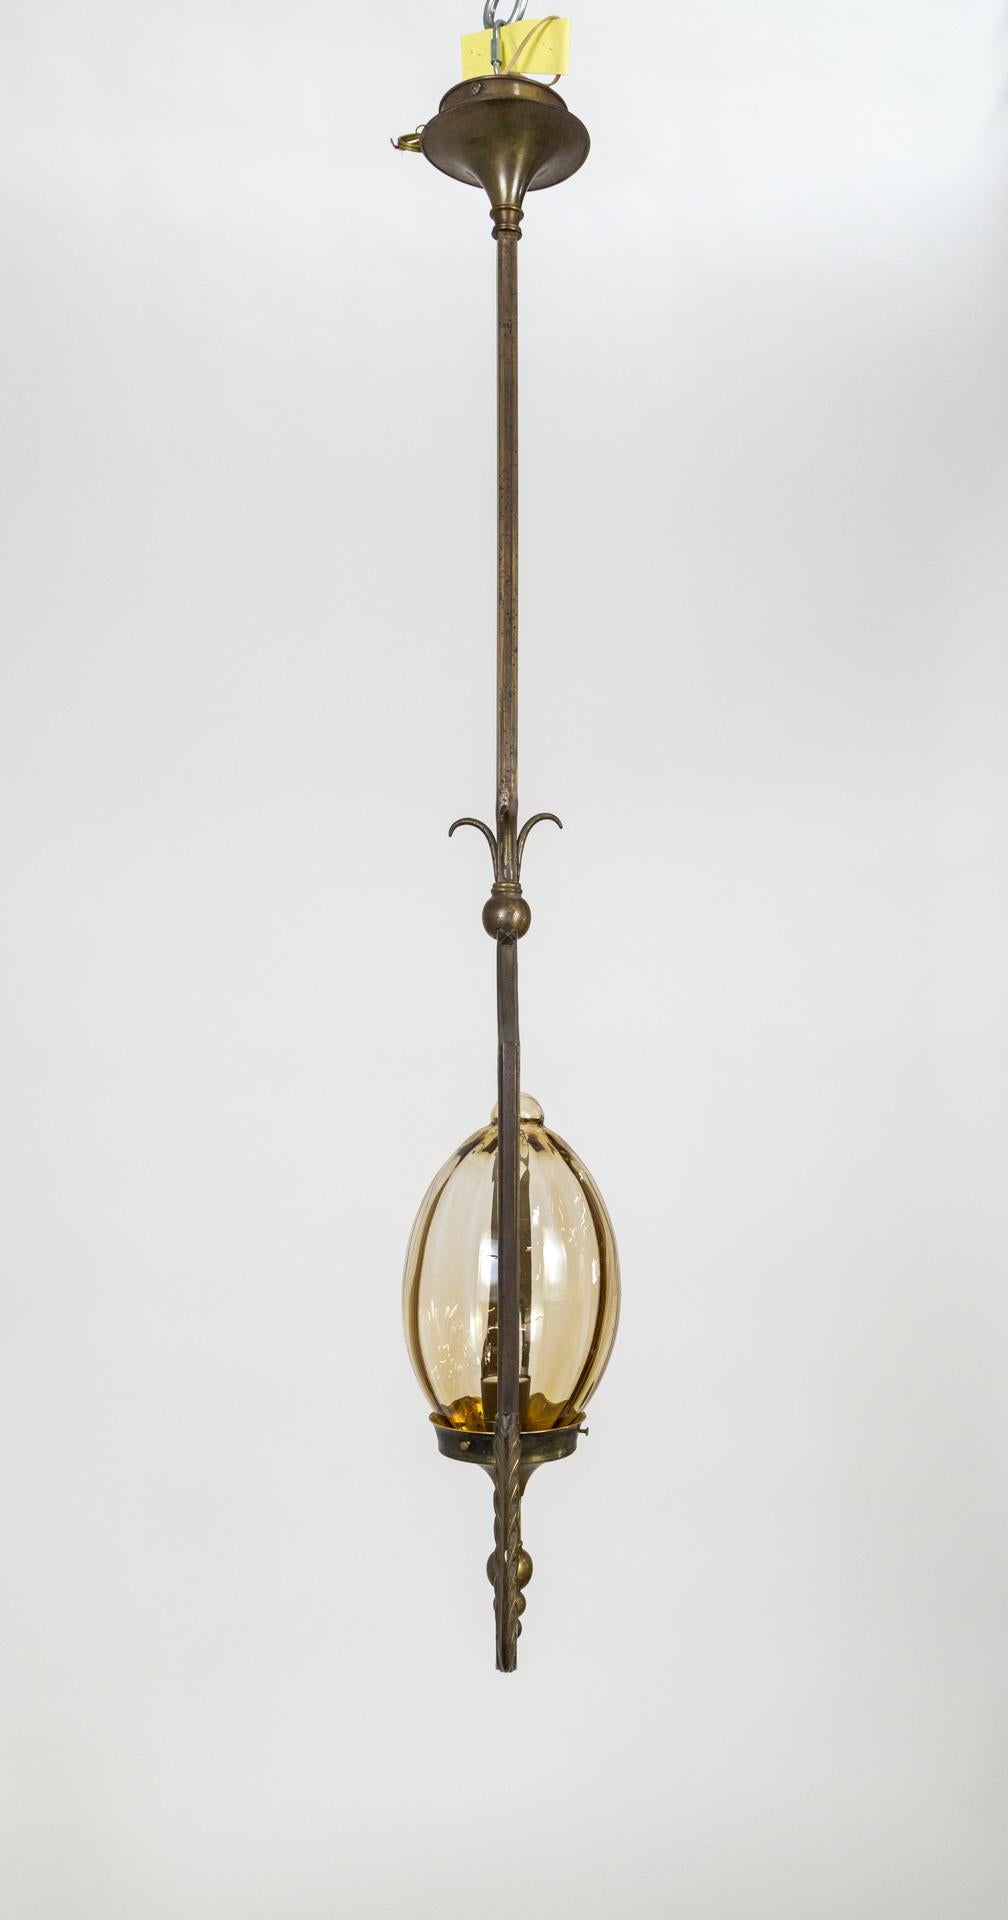 20th Century Large Art Nouveau Oval Glass Pendant Light w/ Stylized Rectangular Frame For Sale